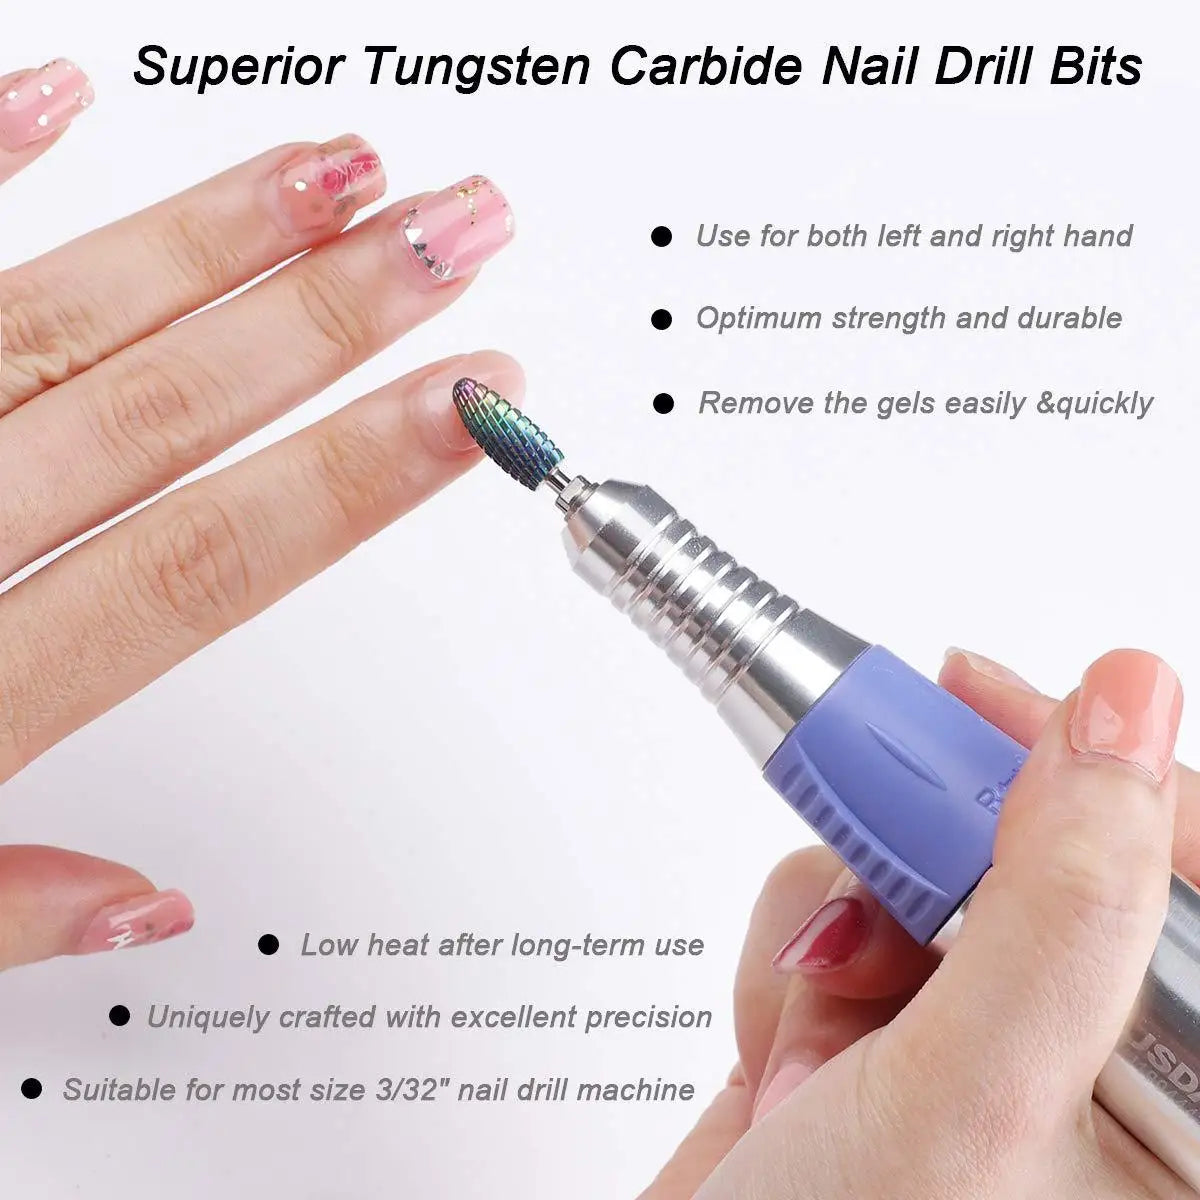 Carbide Nail Drill Bits: Professional Care and Art Essentials